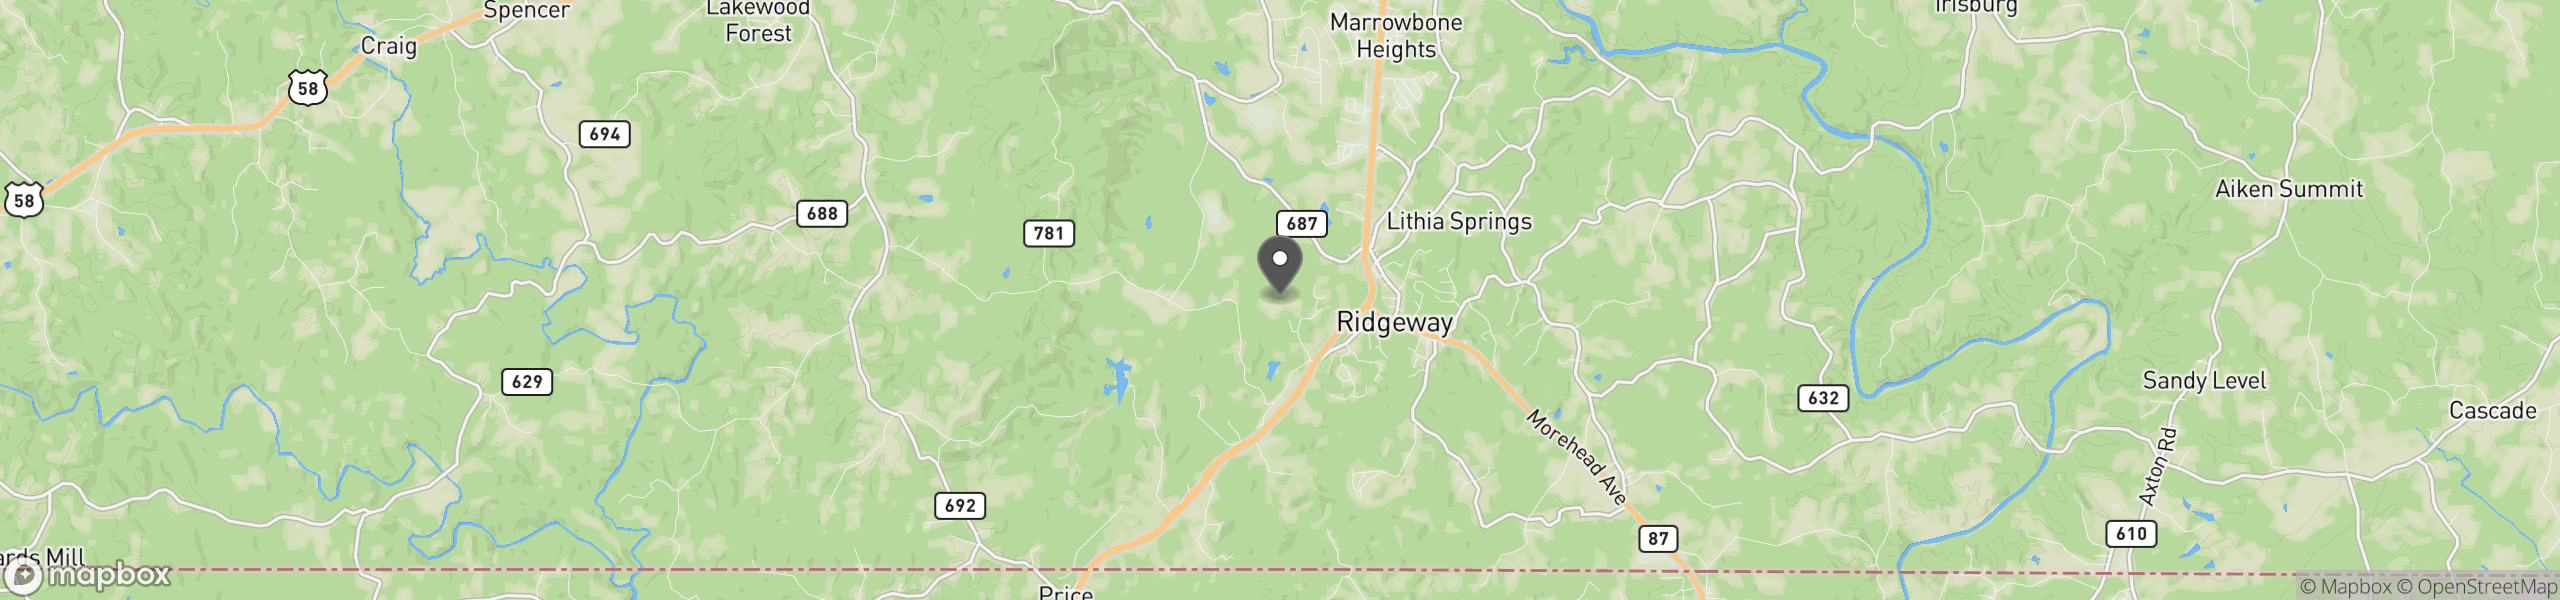 Ridgeway, VA 24148